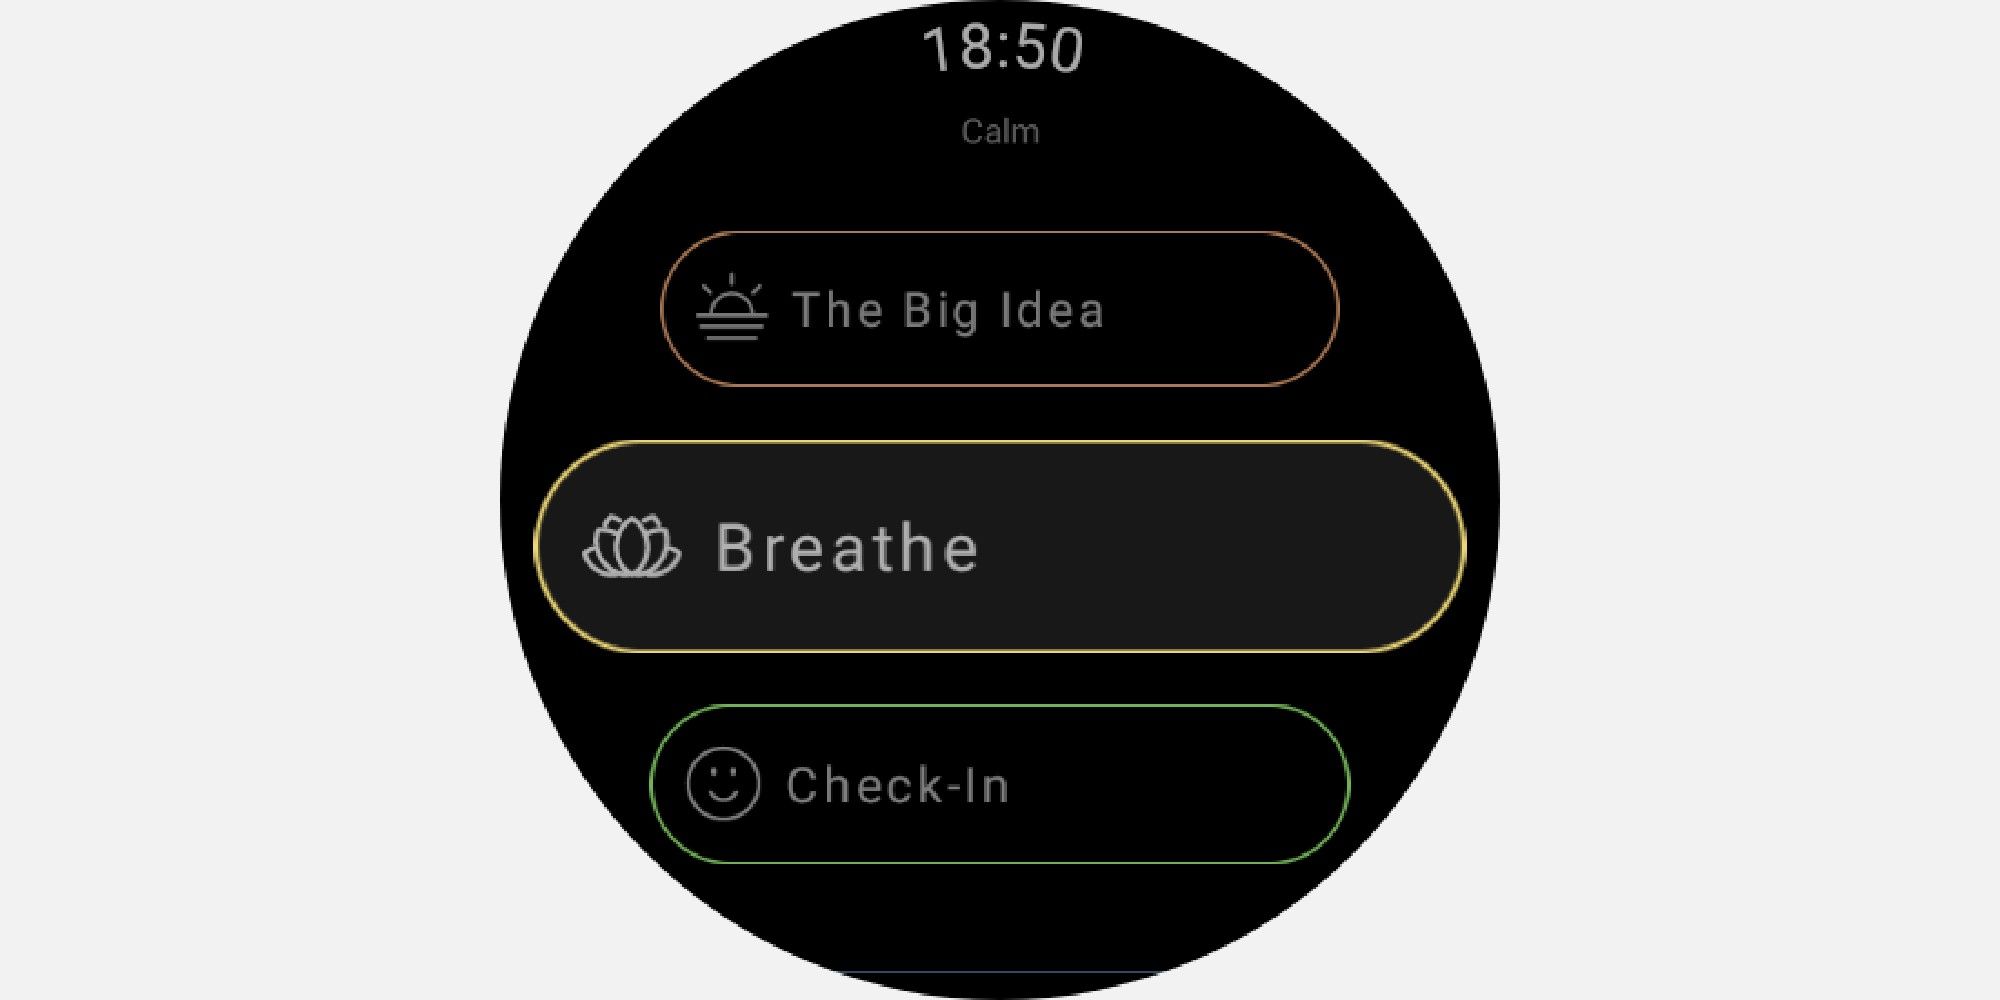 Calm interface on smartwatch